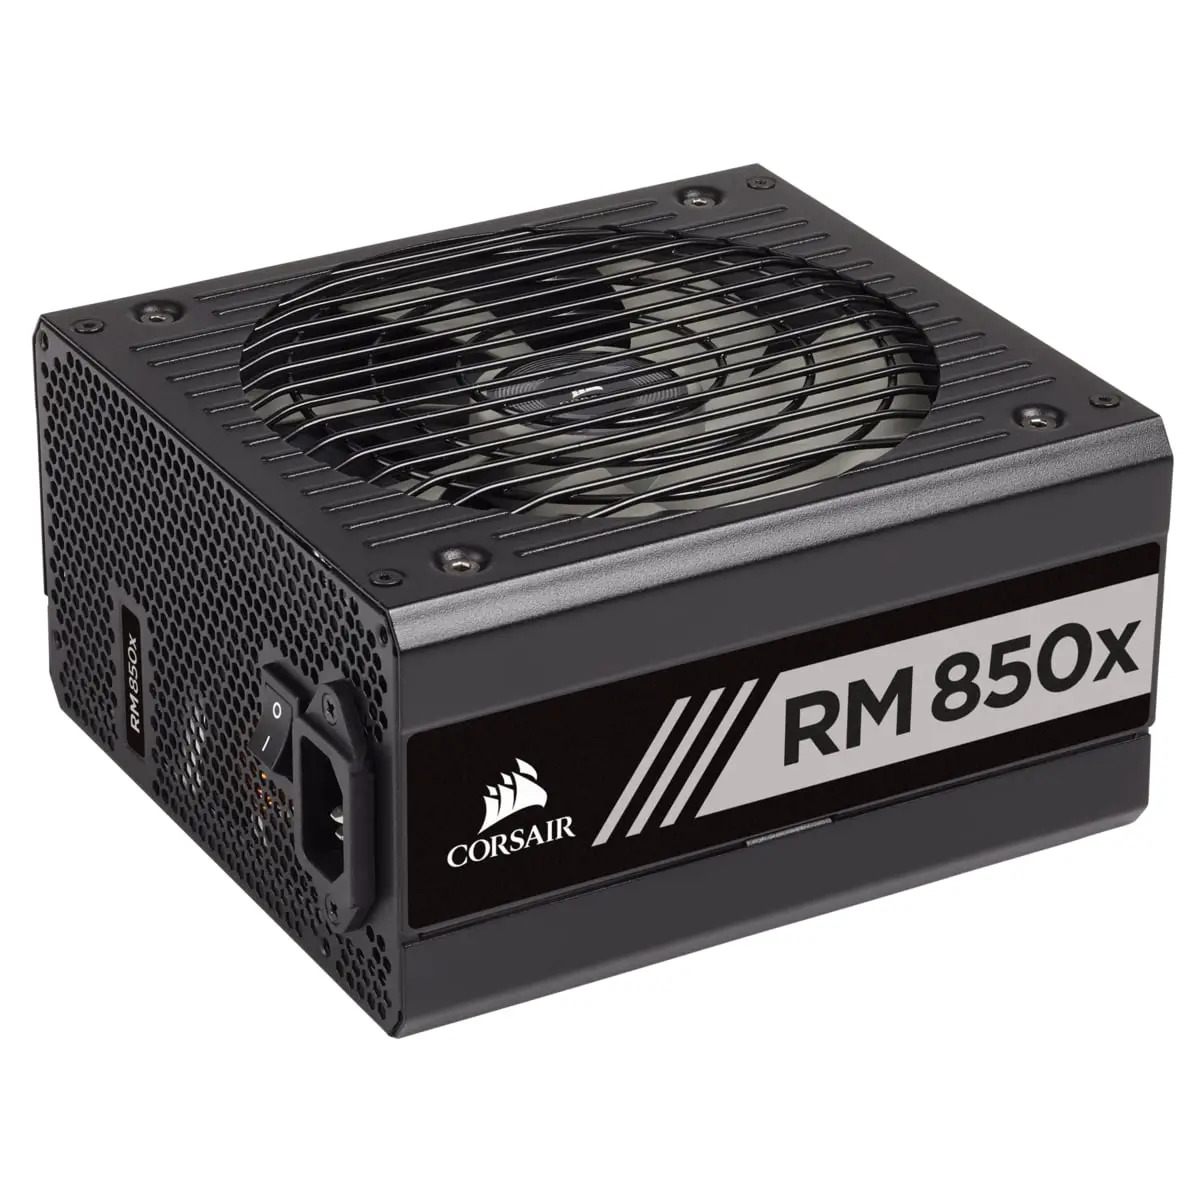 RMx Series High Performance ATX Power Supply